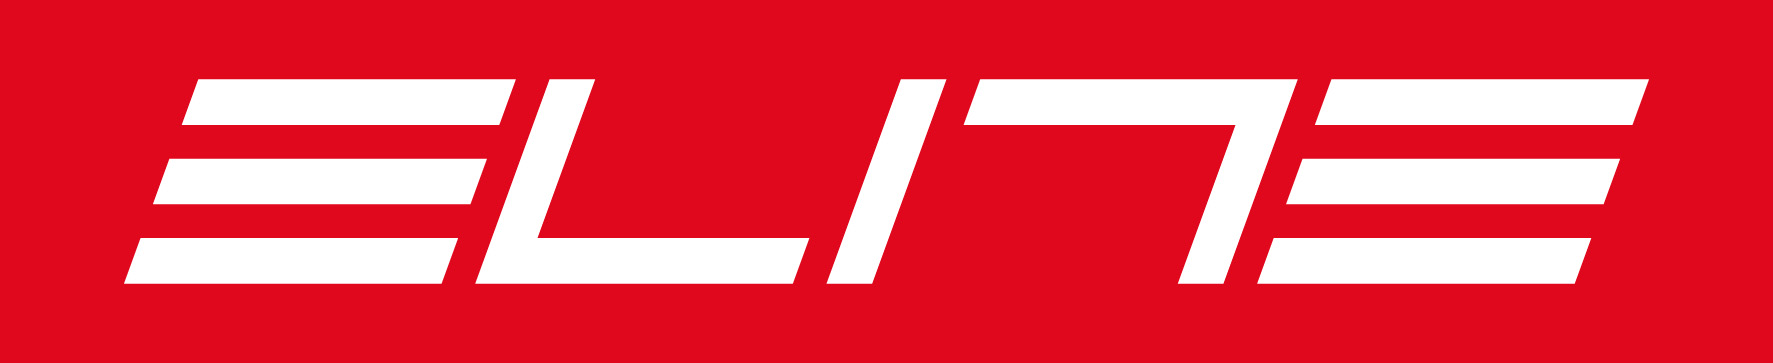 propel Logo photo - 1